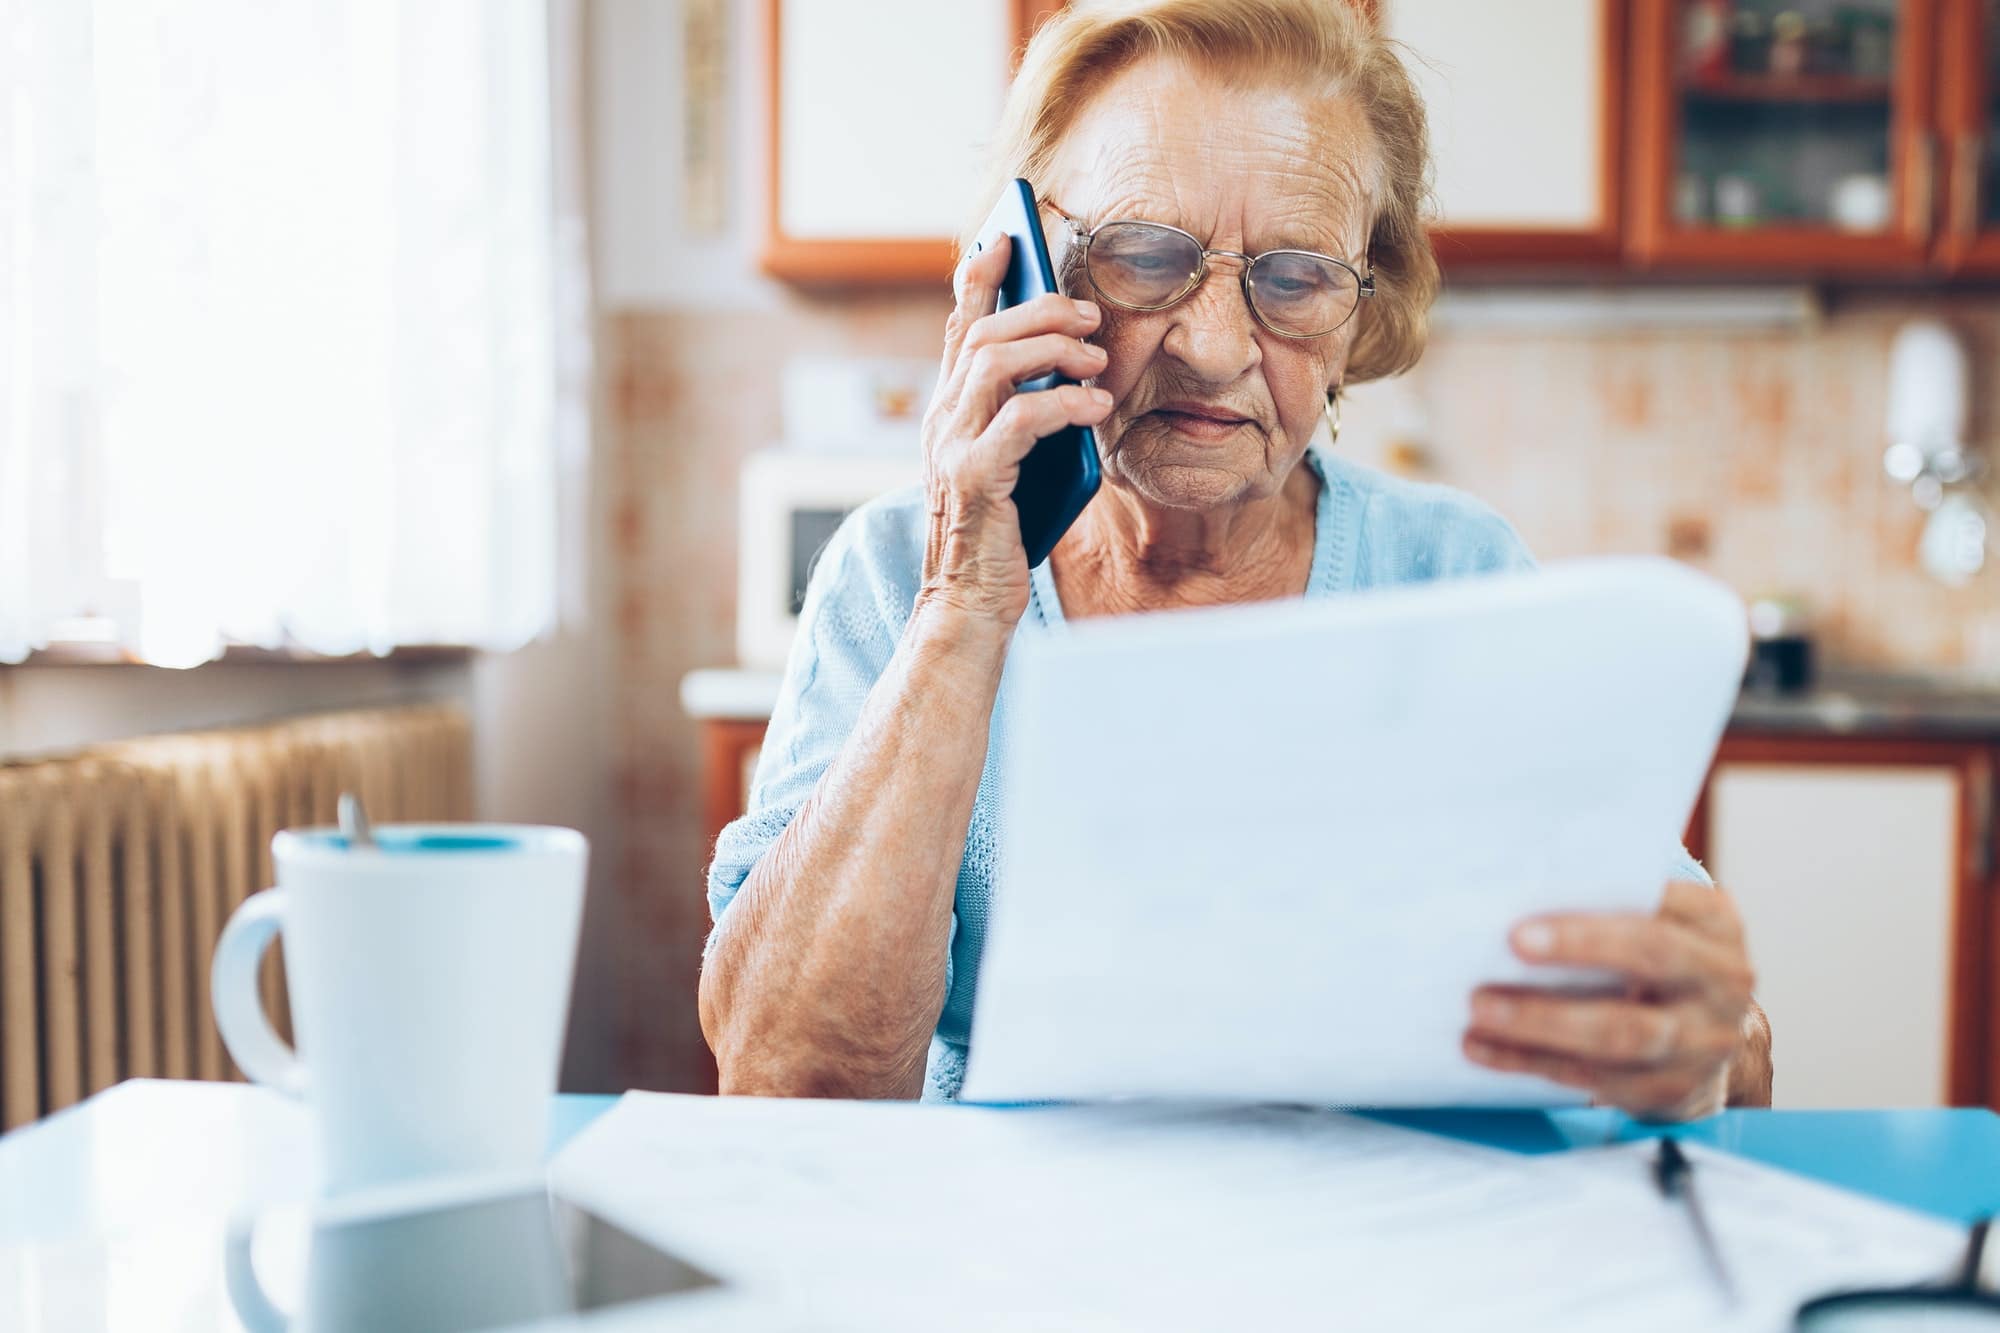 Elderly woman contacting custumer services after recieving a bill